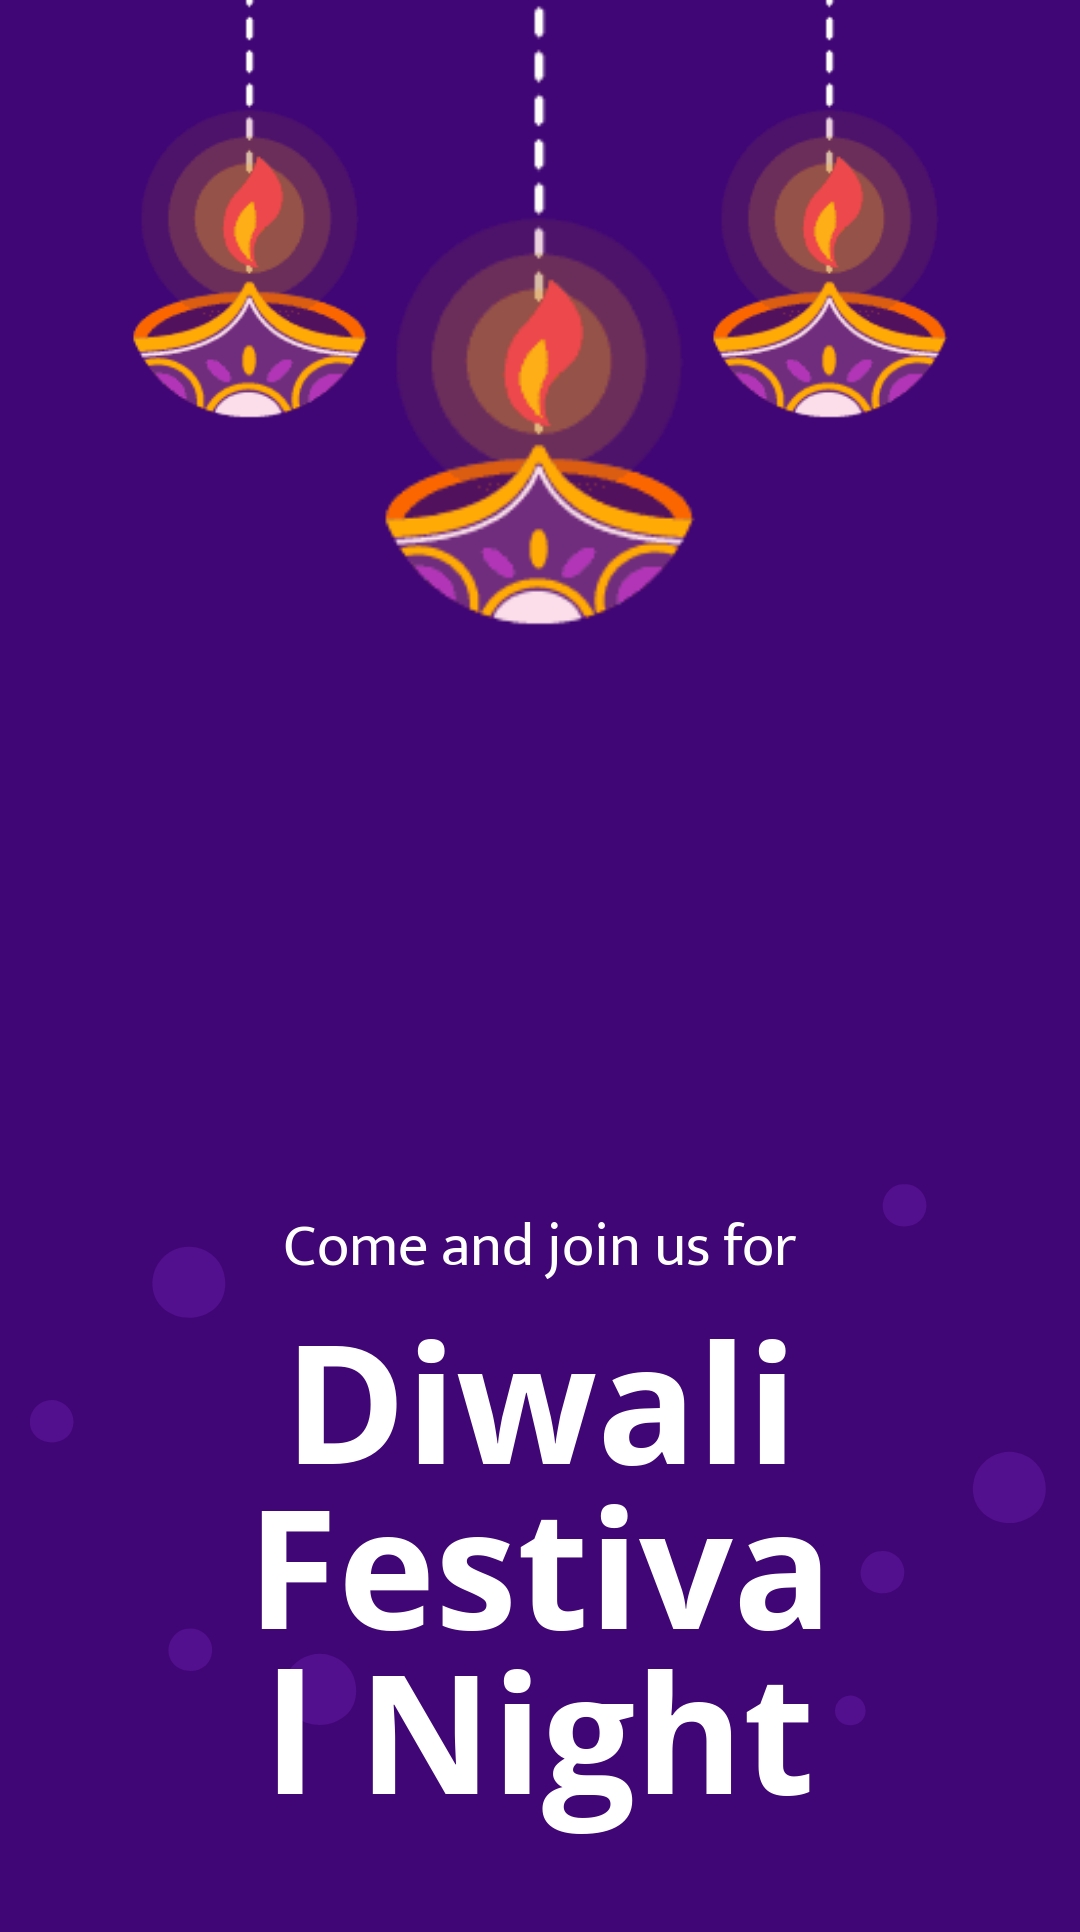 Diwali Festival Event Snapchat Geofilter